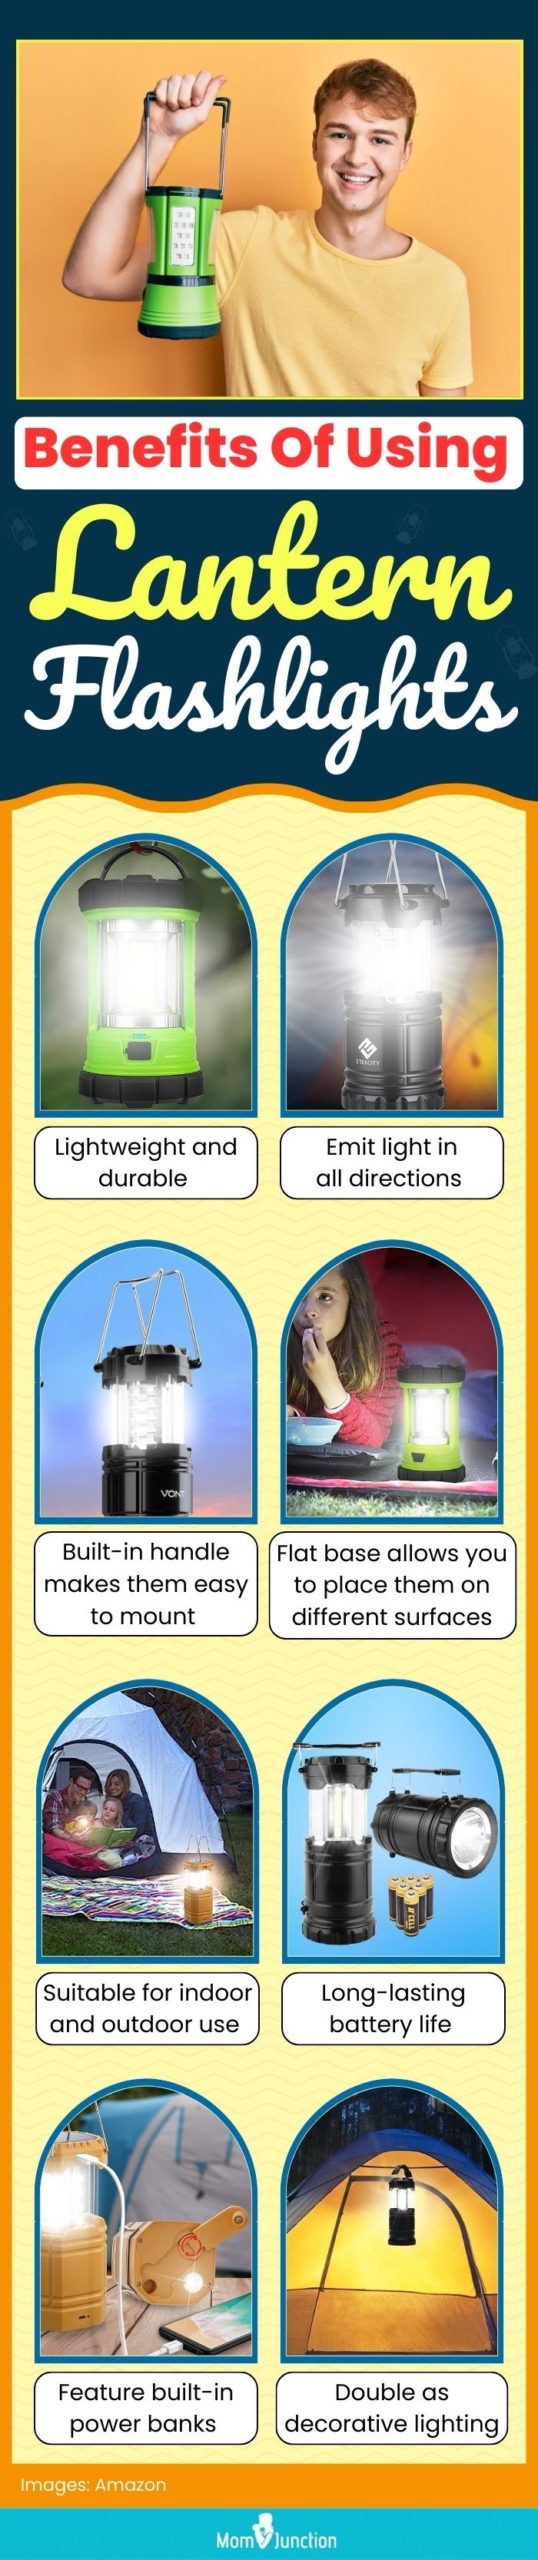 Benefits Of Using Lantern Flashlights (infographic)